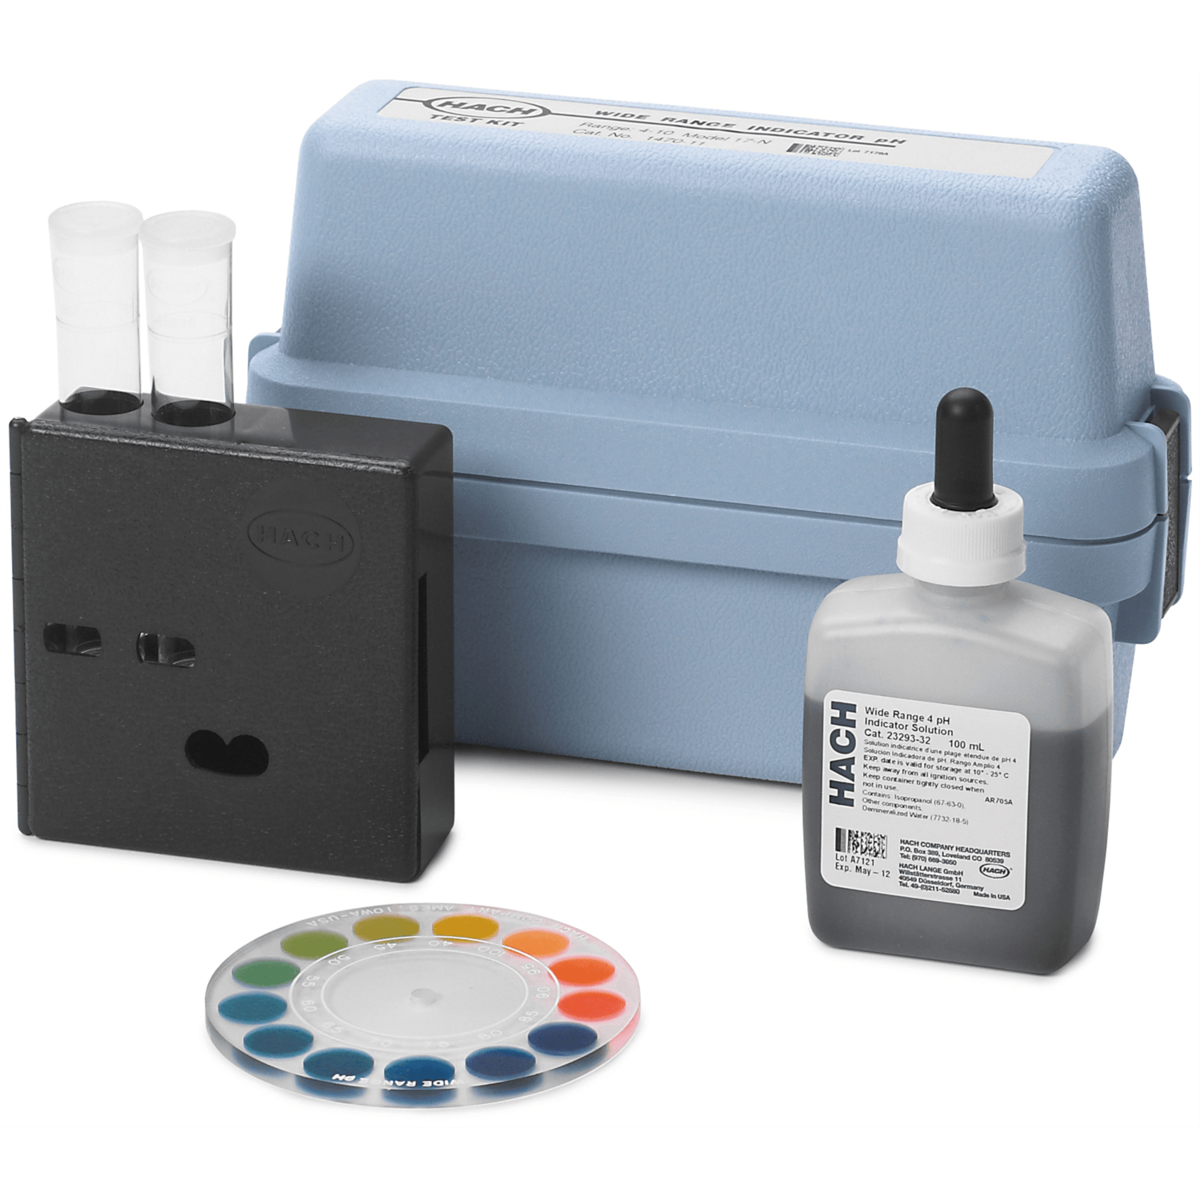 Hach pH Test Kit, 4.0 - 10.0 pH, Model 17N, 147011